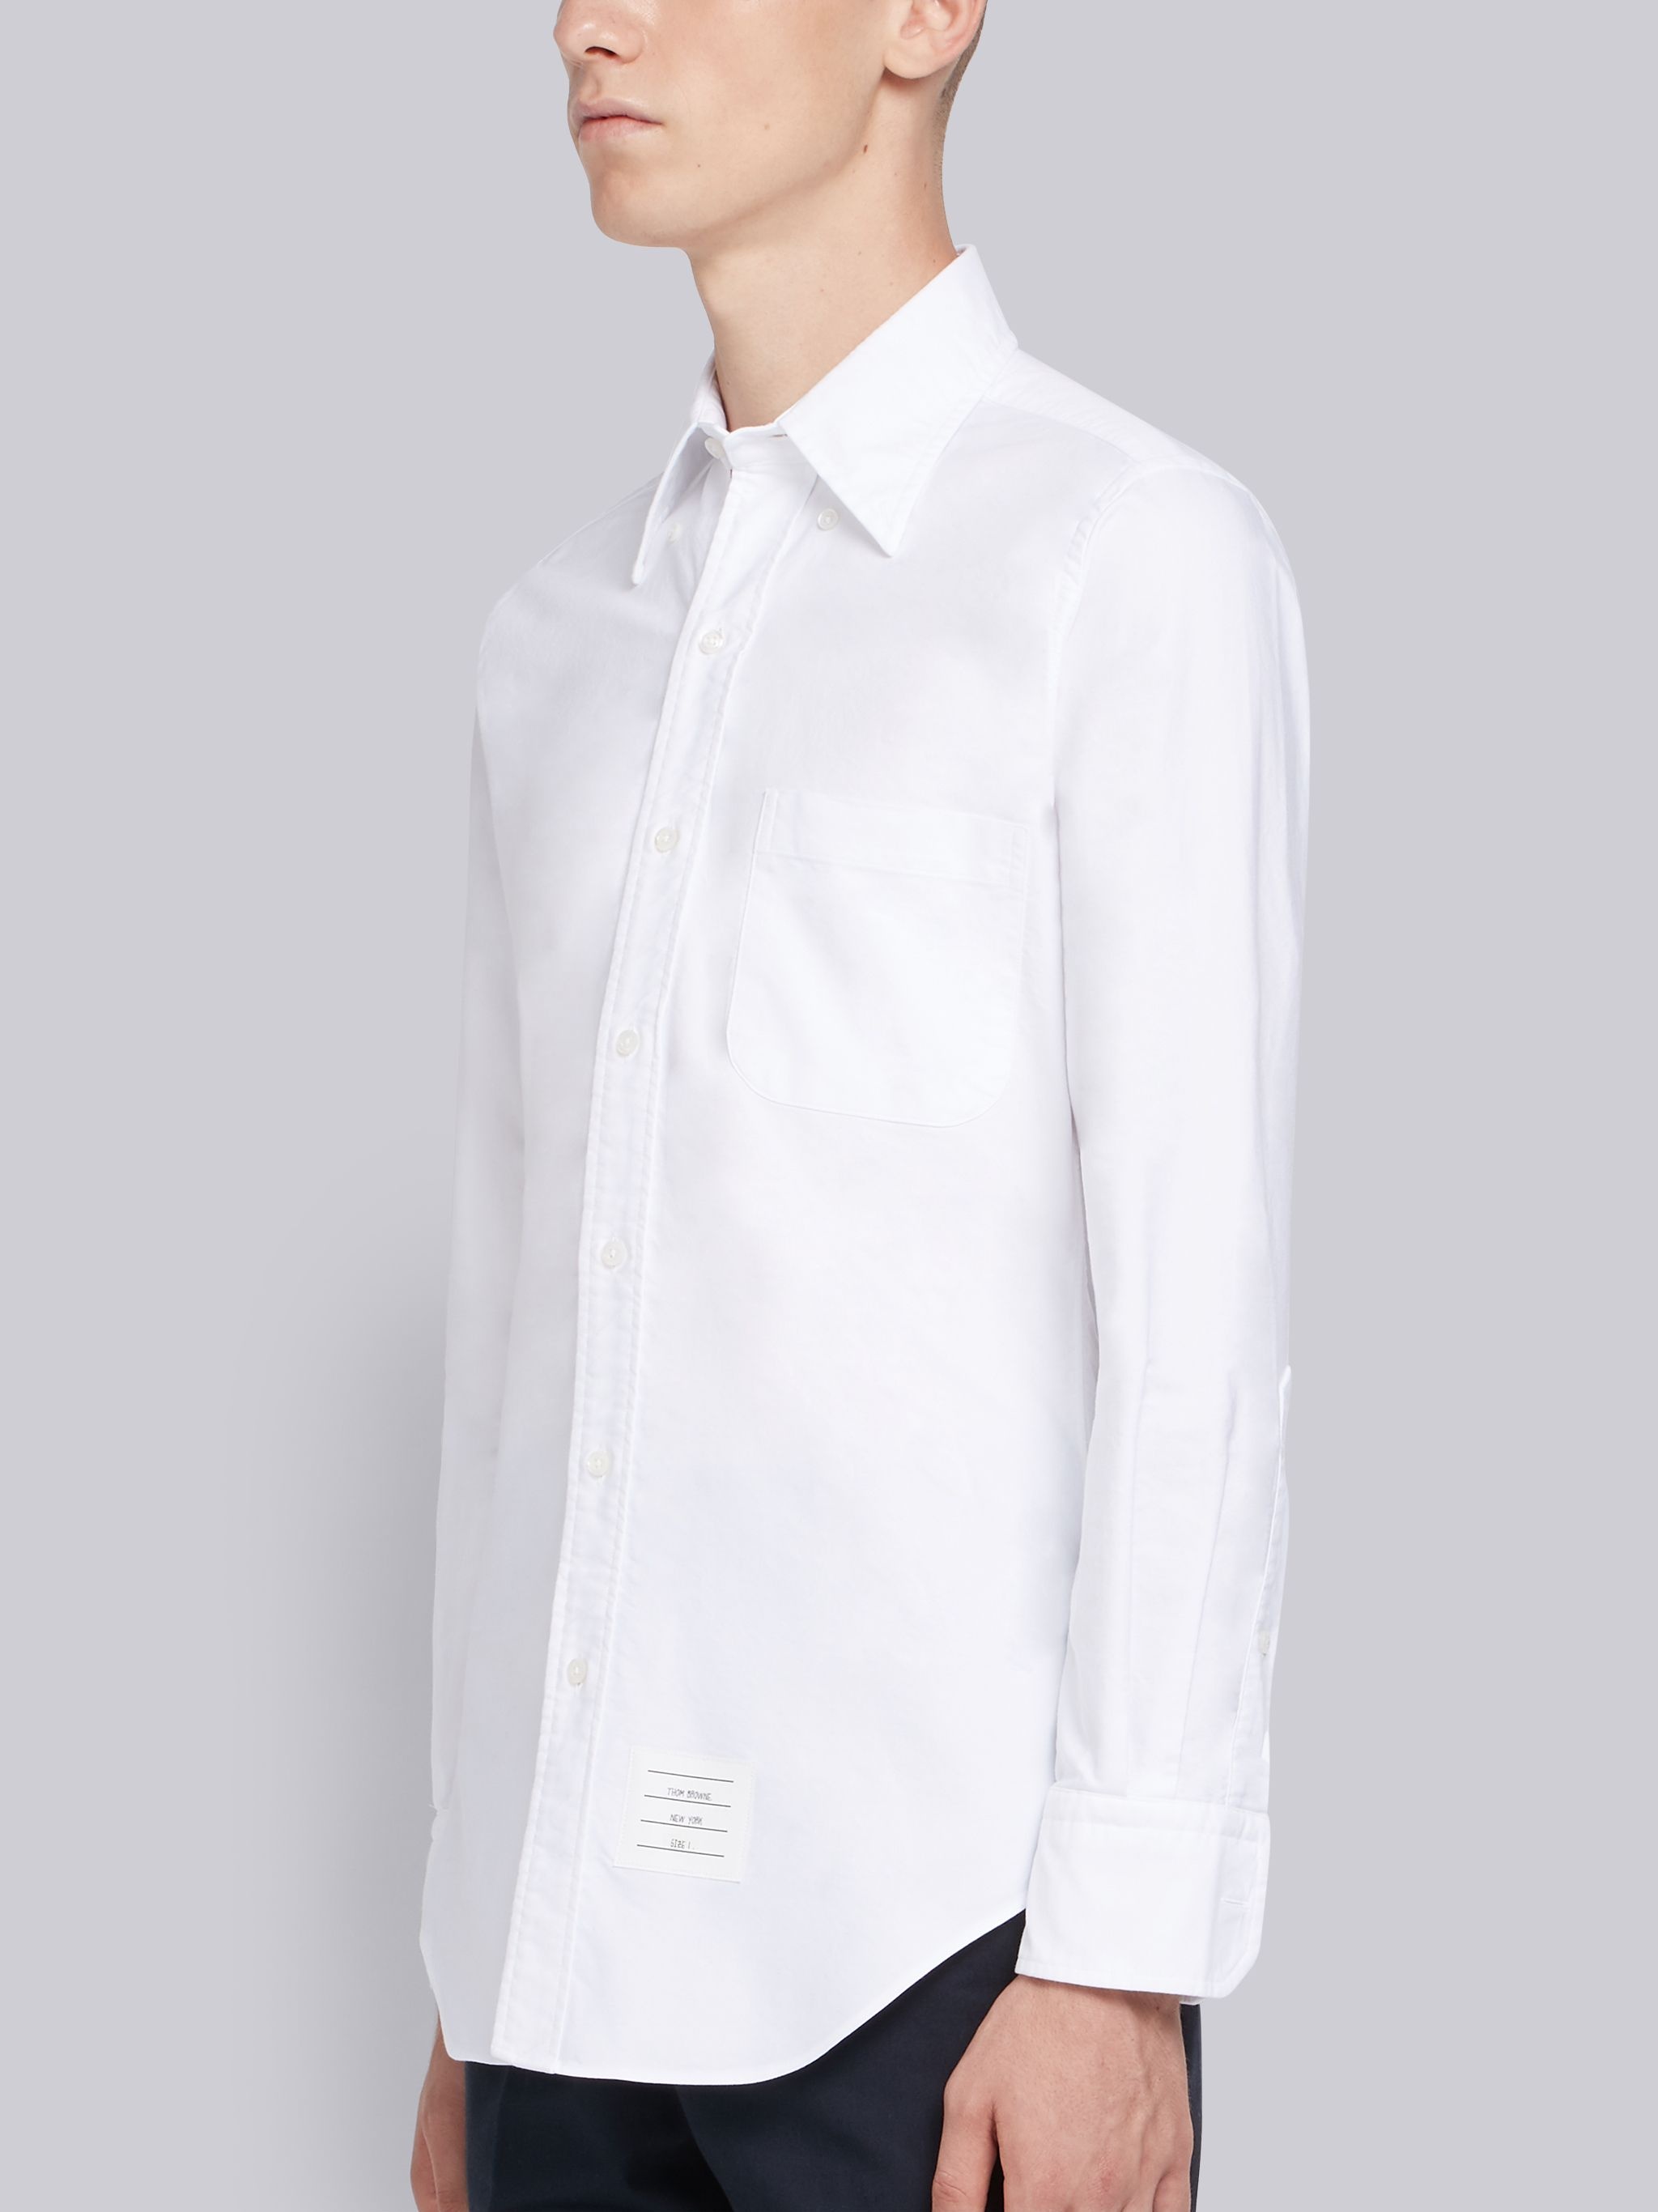 White Cotton Oxford Grosgrain Placket Shirt - 5